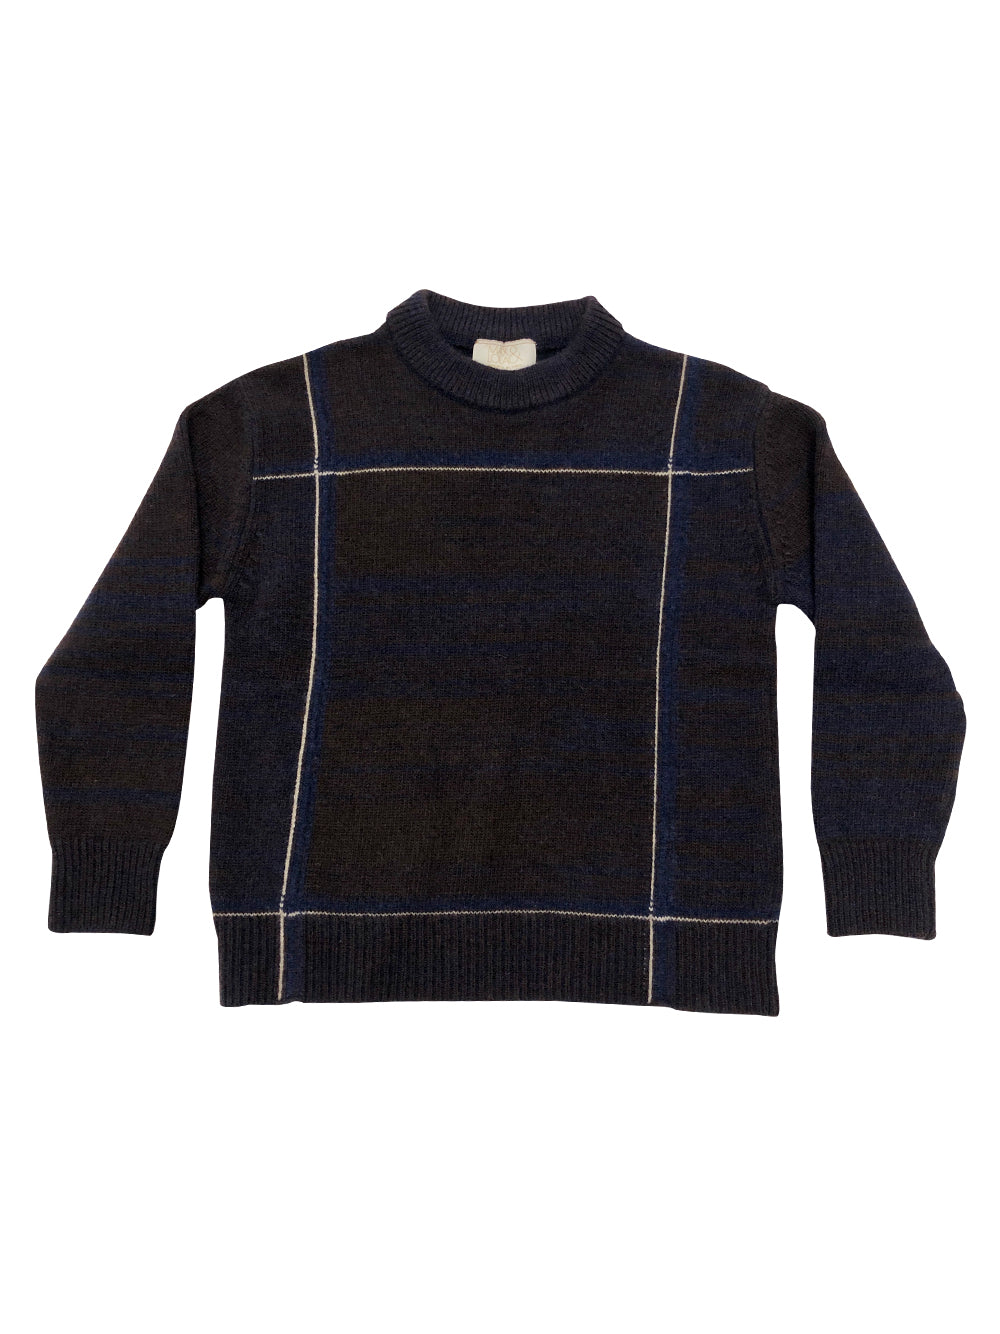 Pocar Brown Sweater